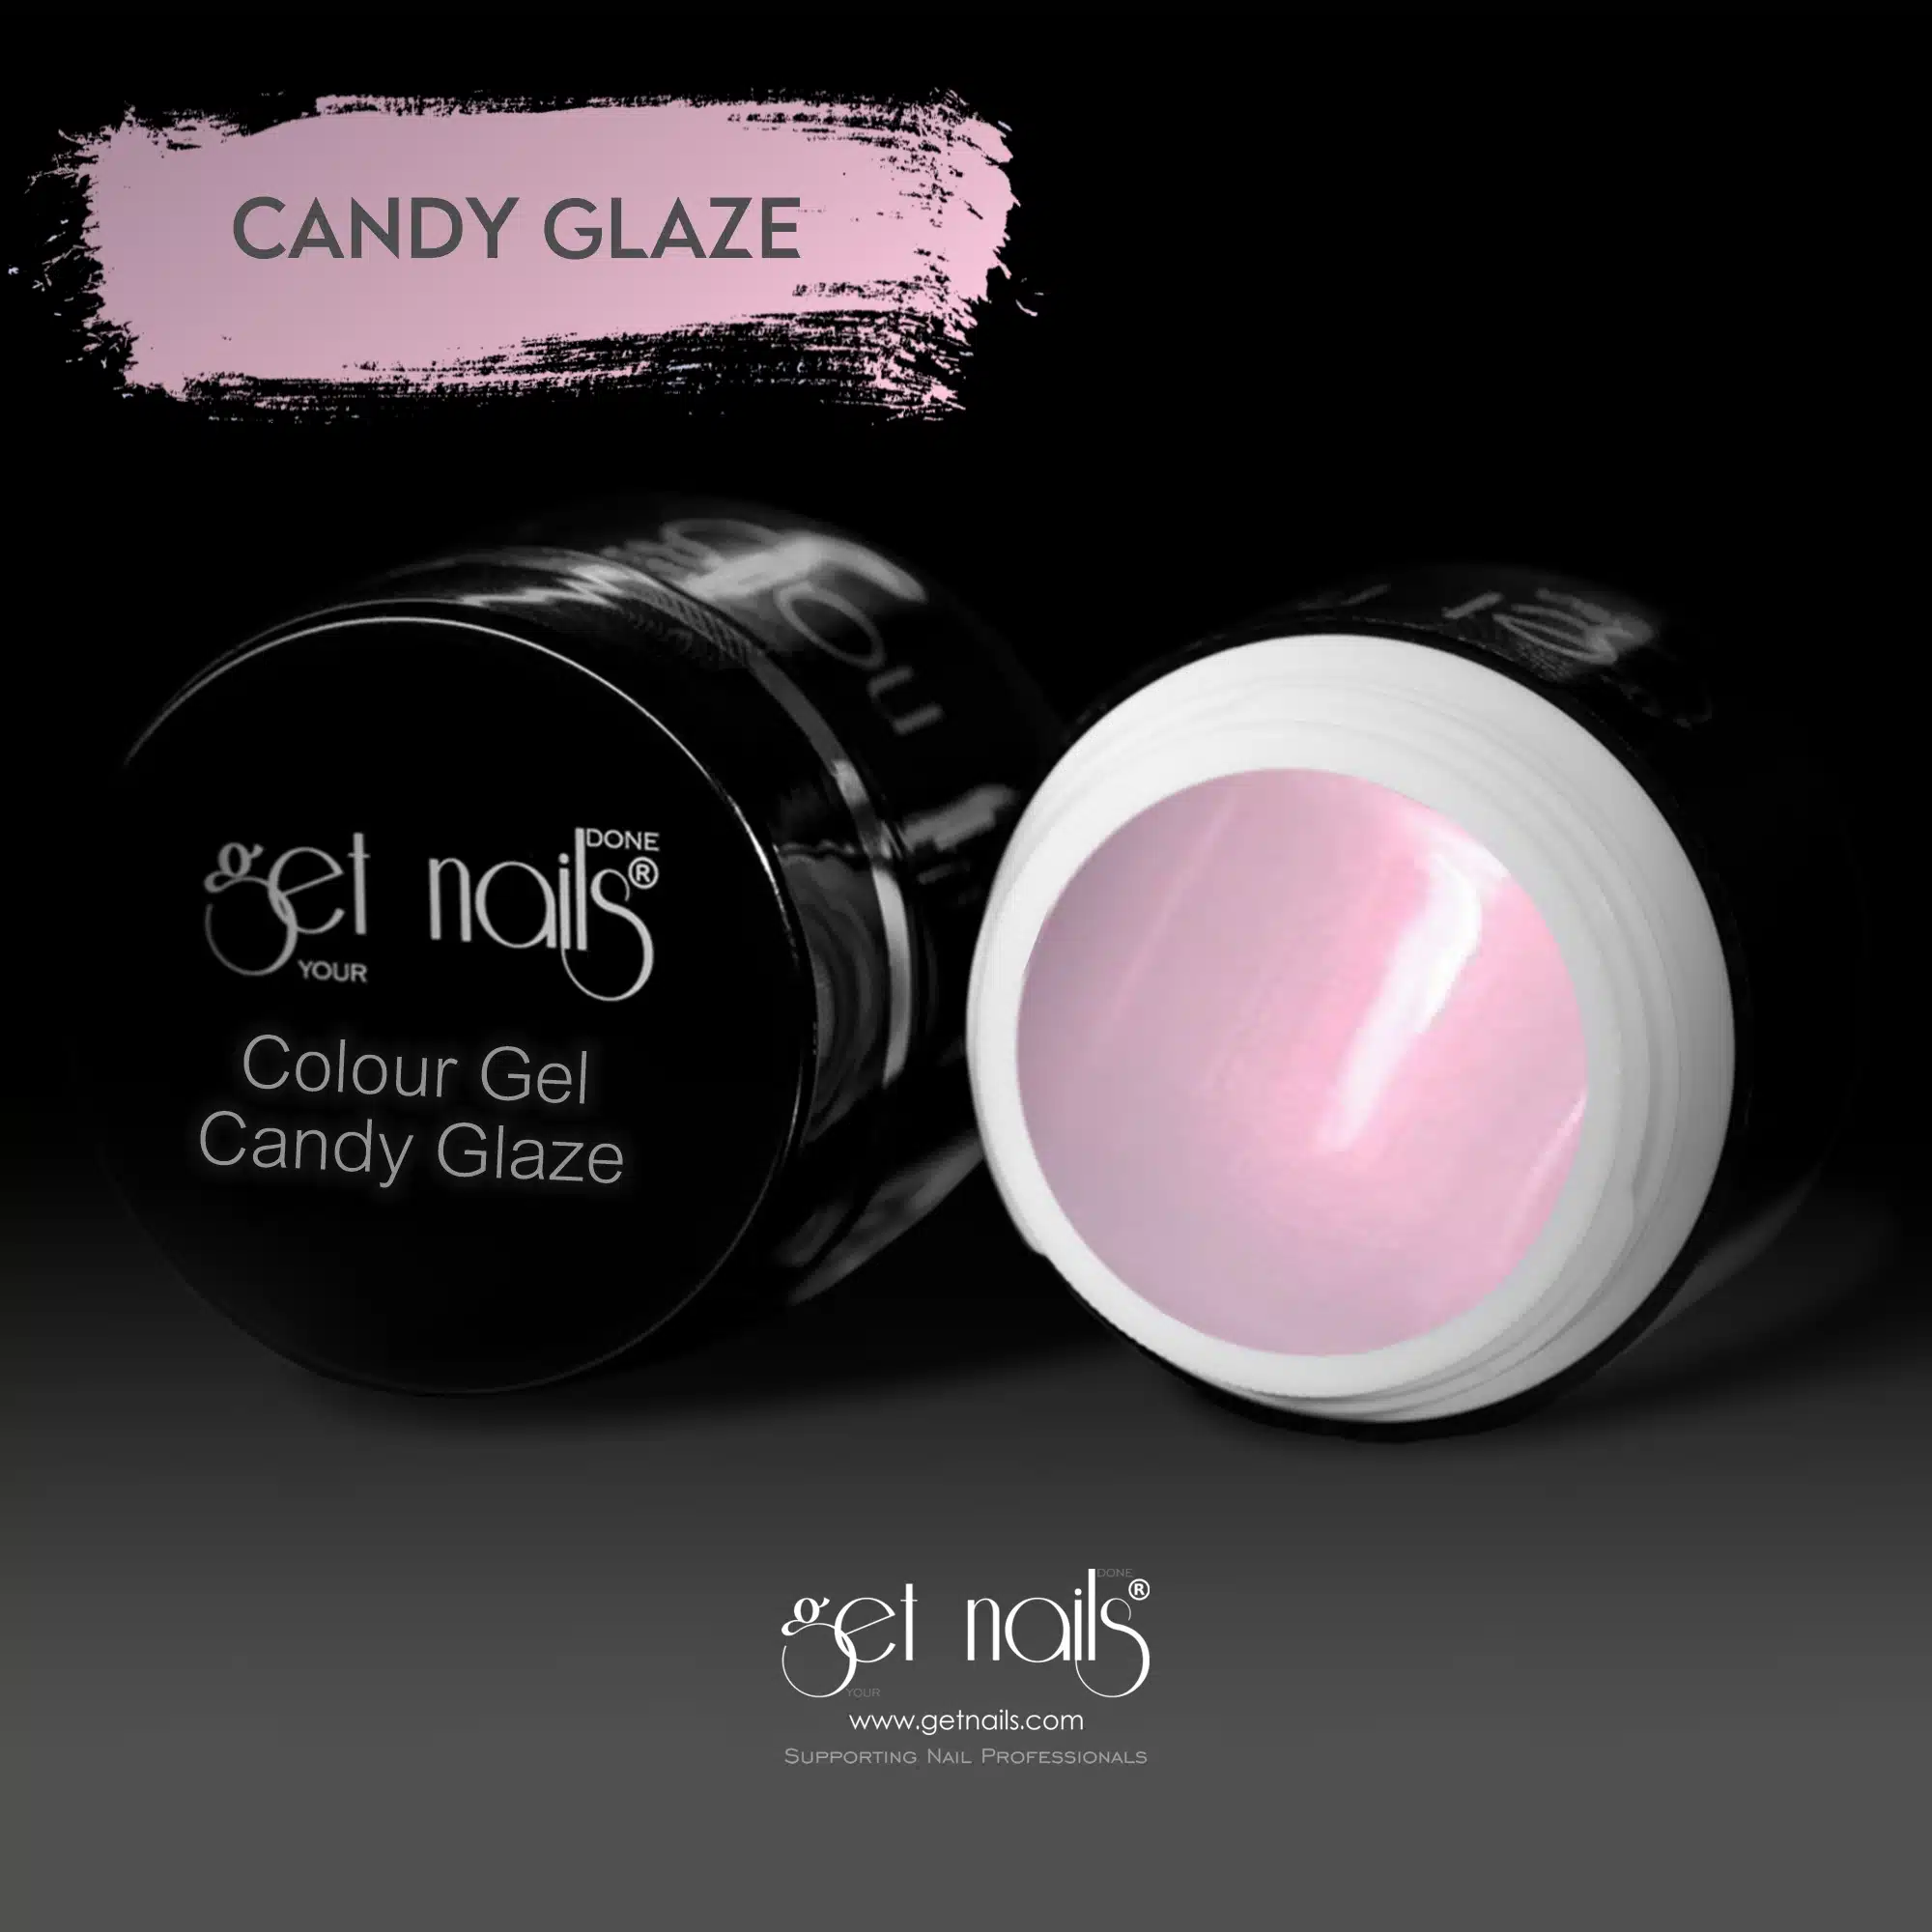 Get Nails Austria - Color Gel Candy Glaze 5g